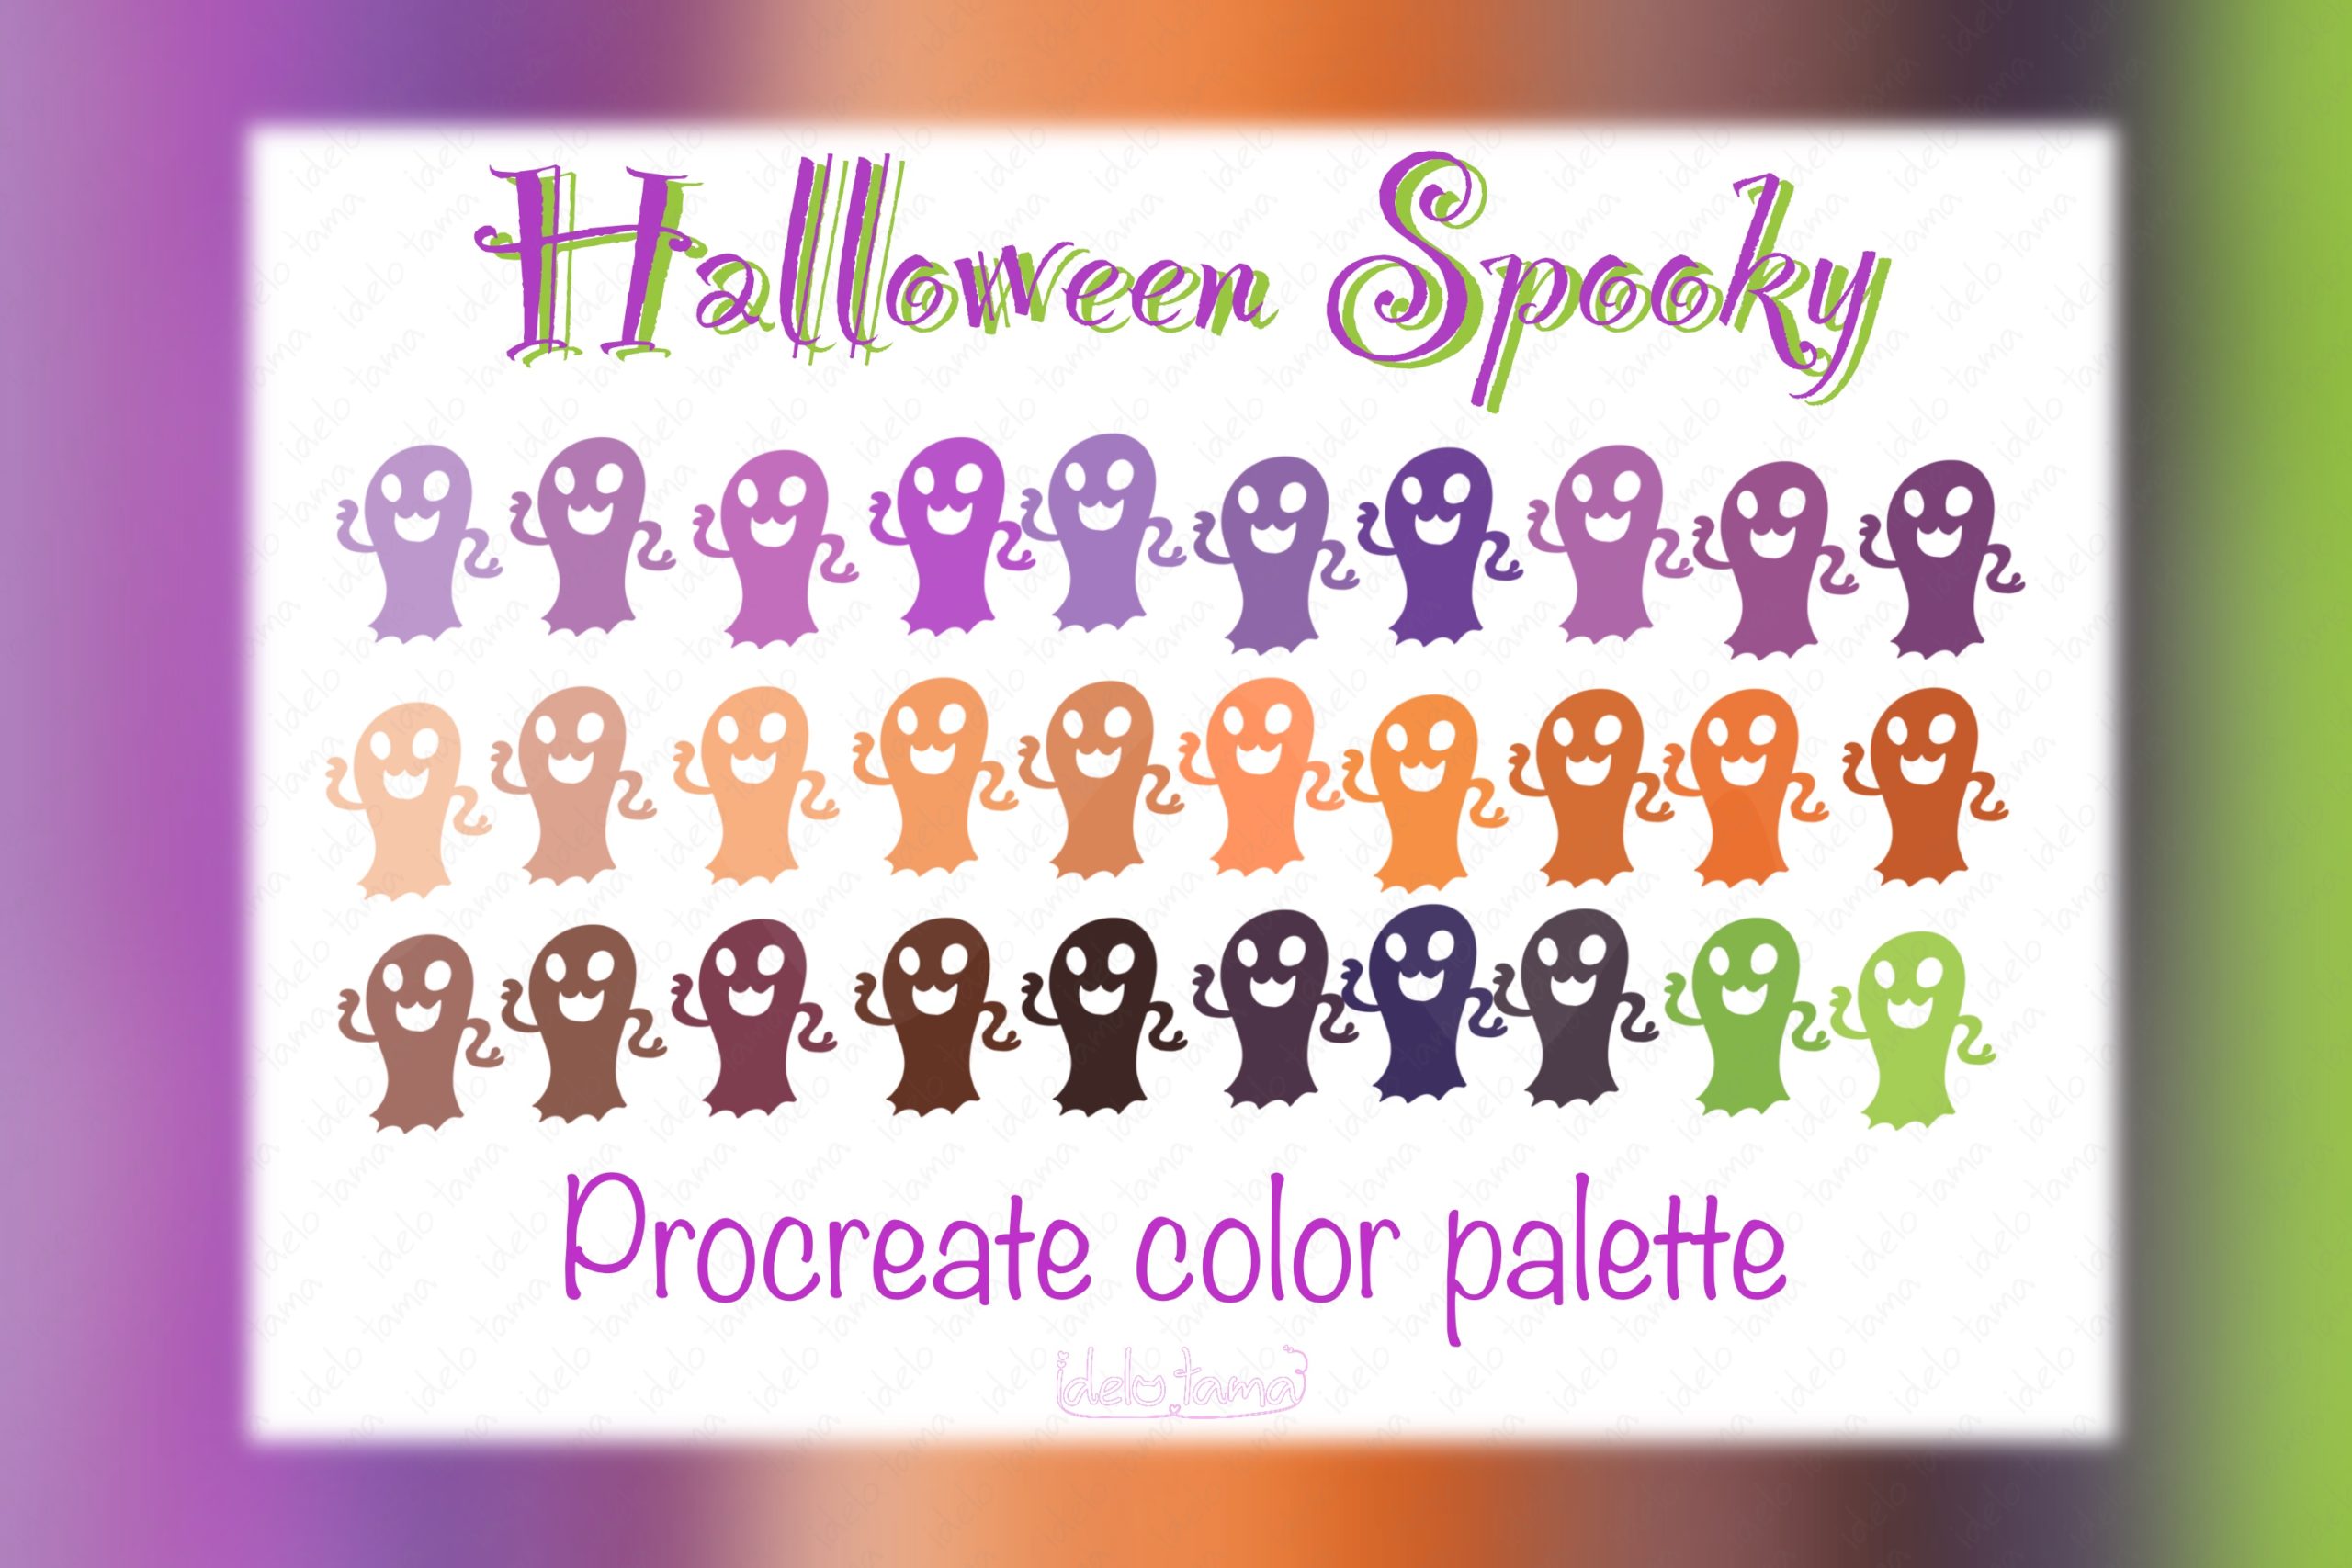 Procreate Color Palette Halloween Spooky